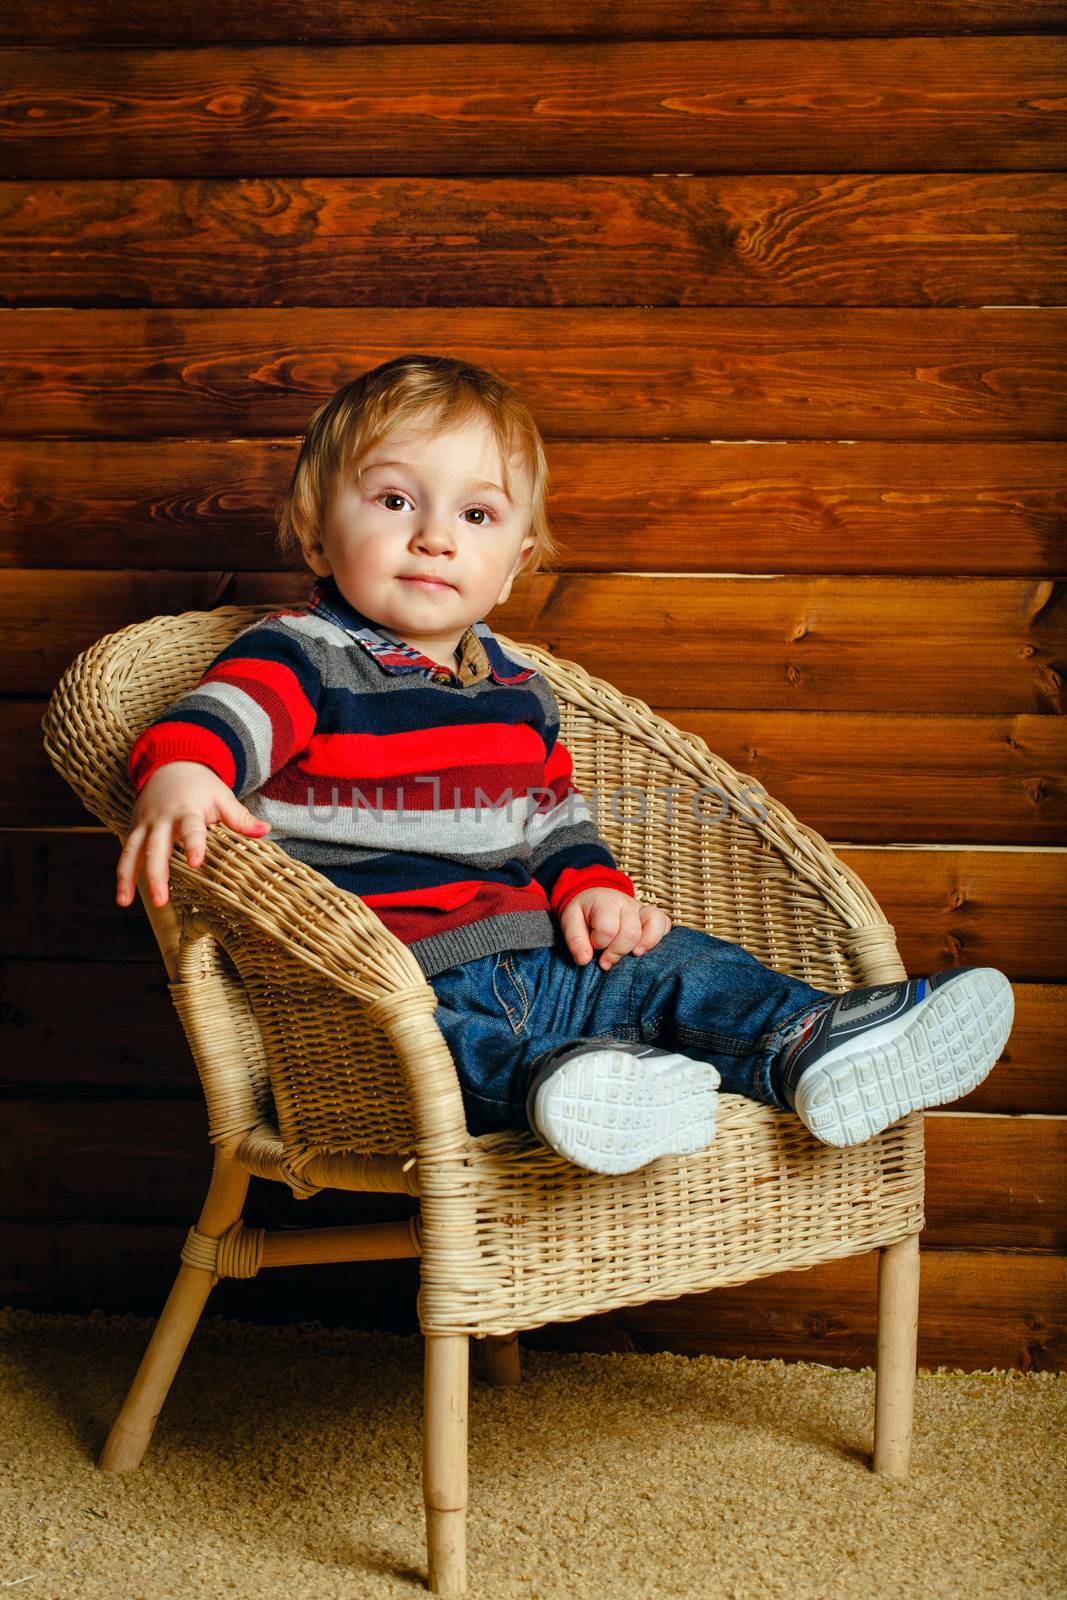 Boy sitting in wicker chair by Vagengeym